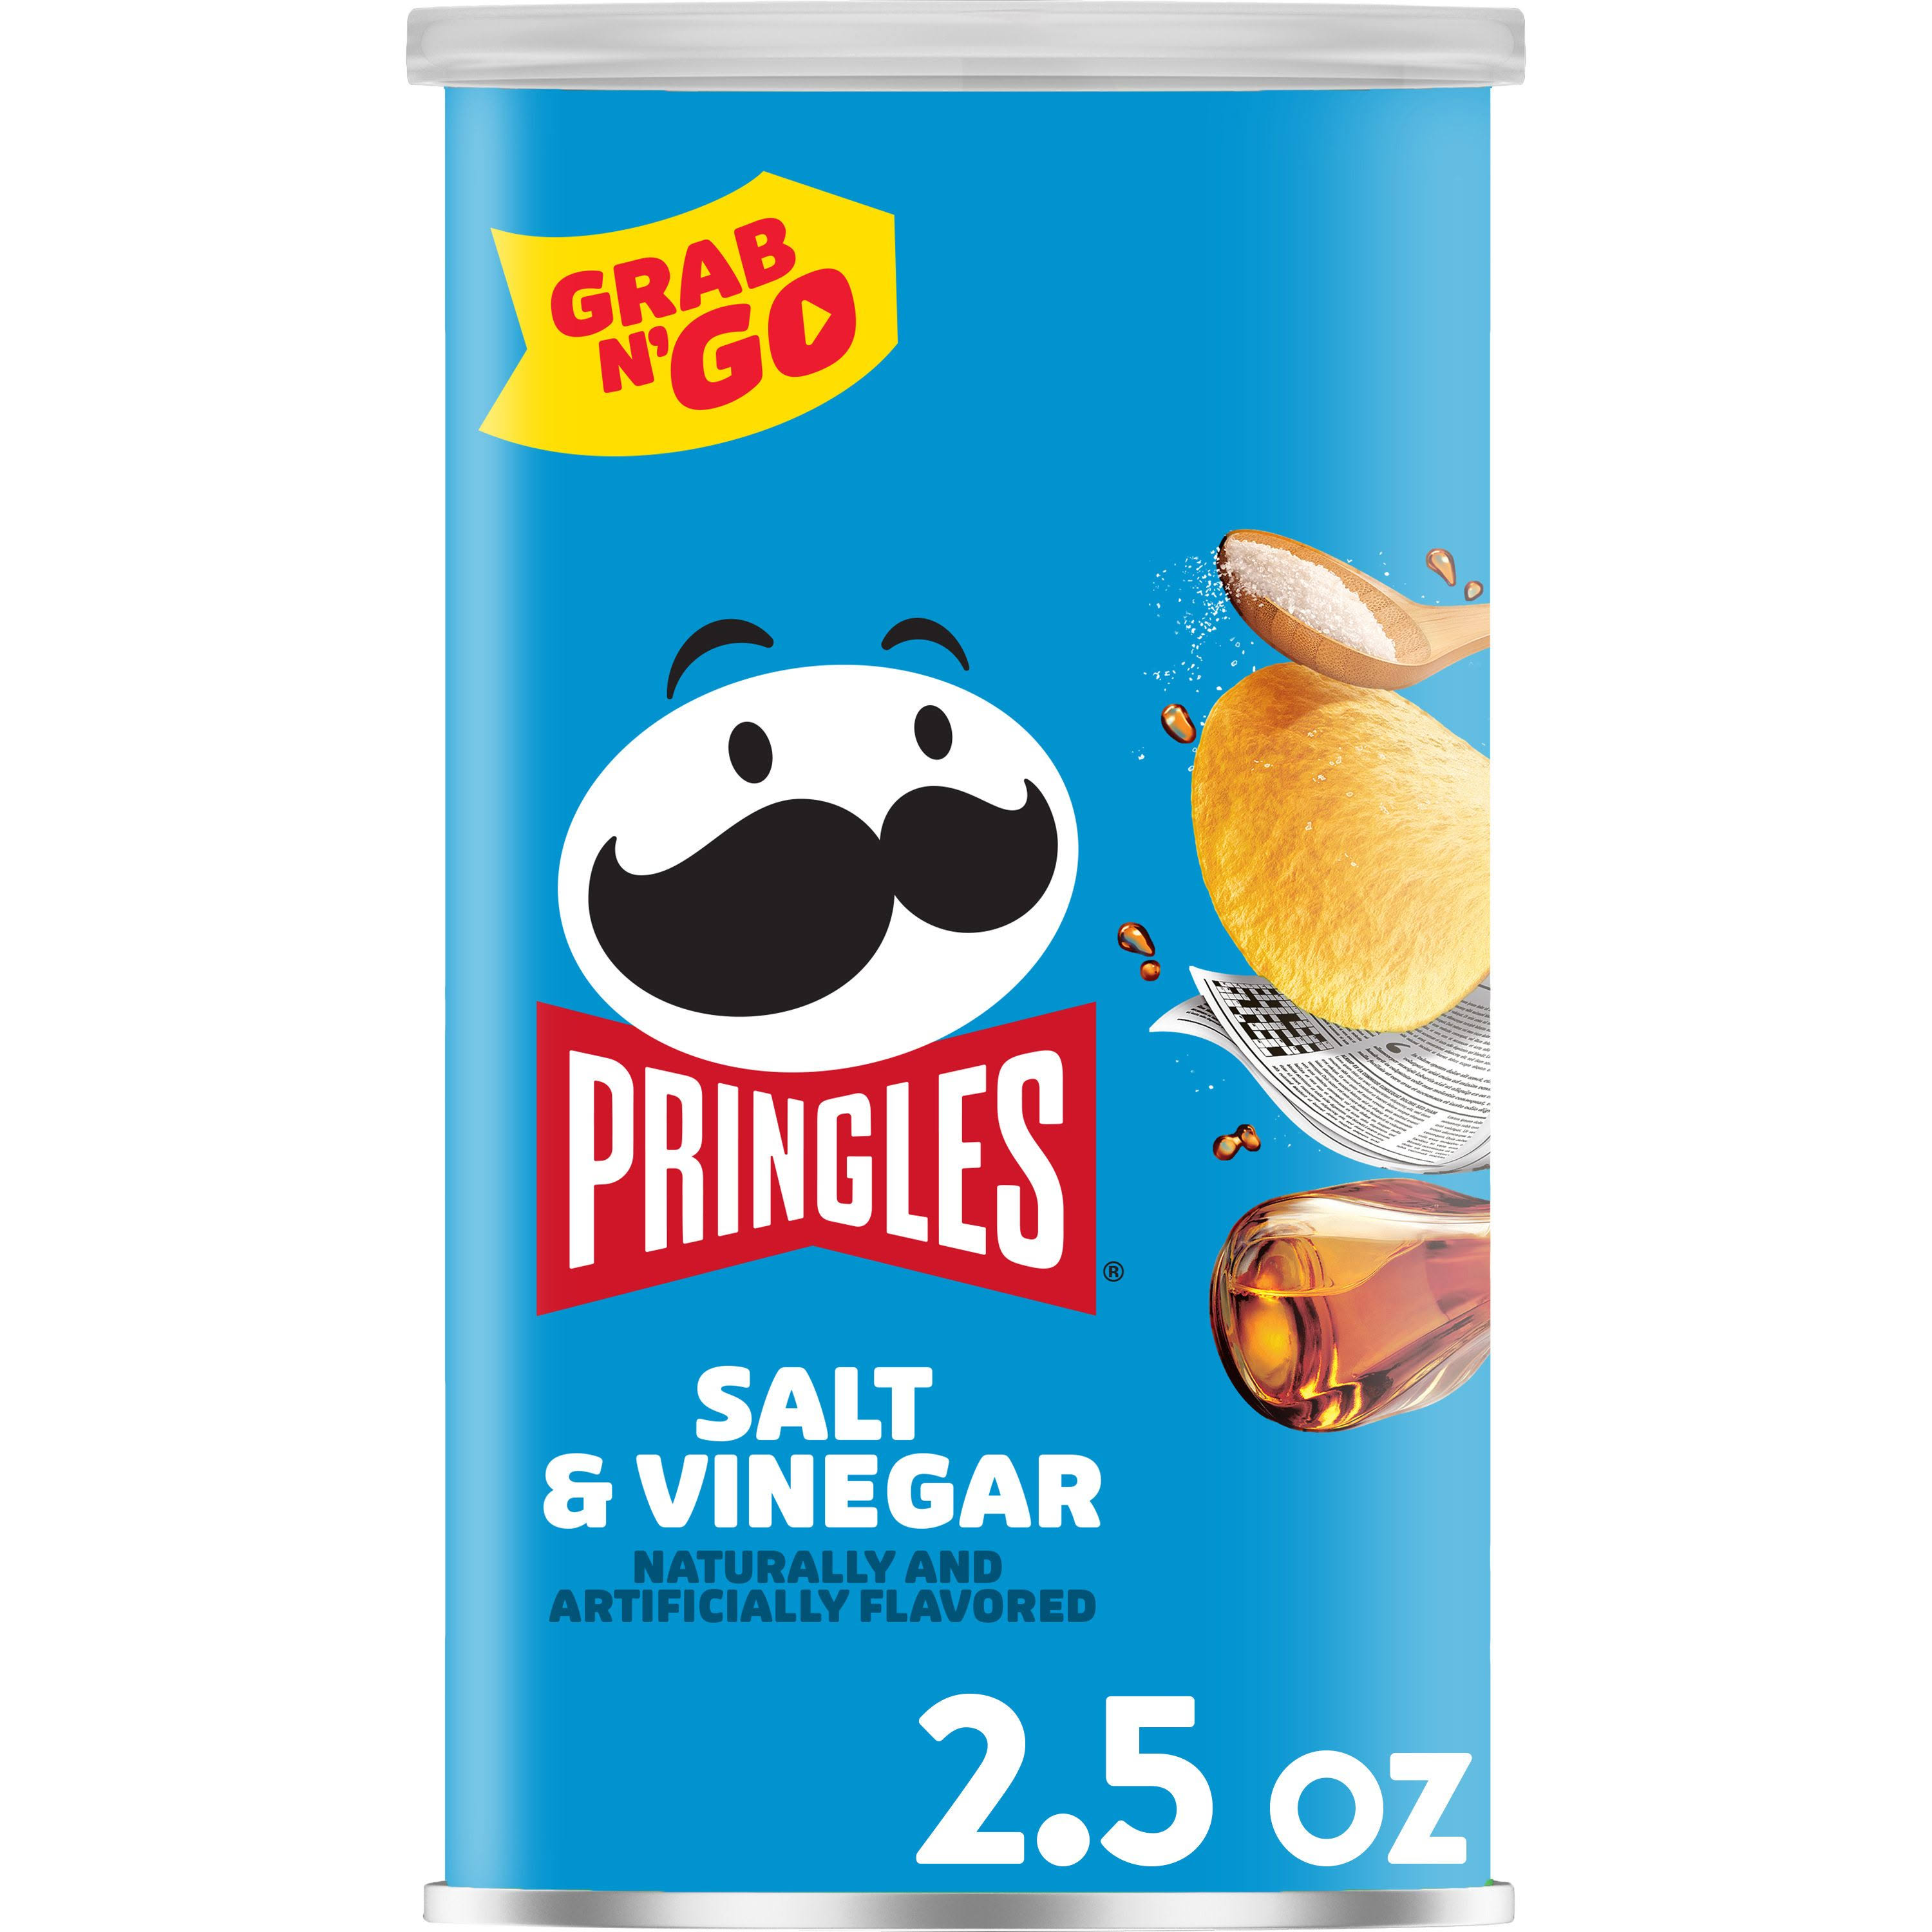 Pringles Potato Crisps - Salt and Vinegar, 2.5oz